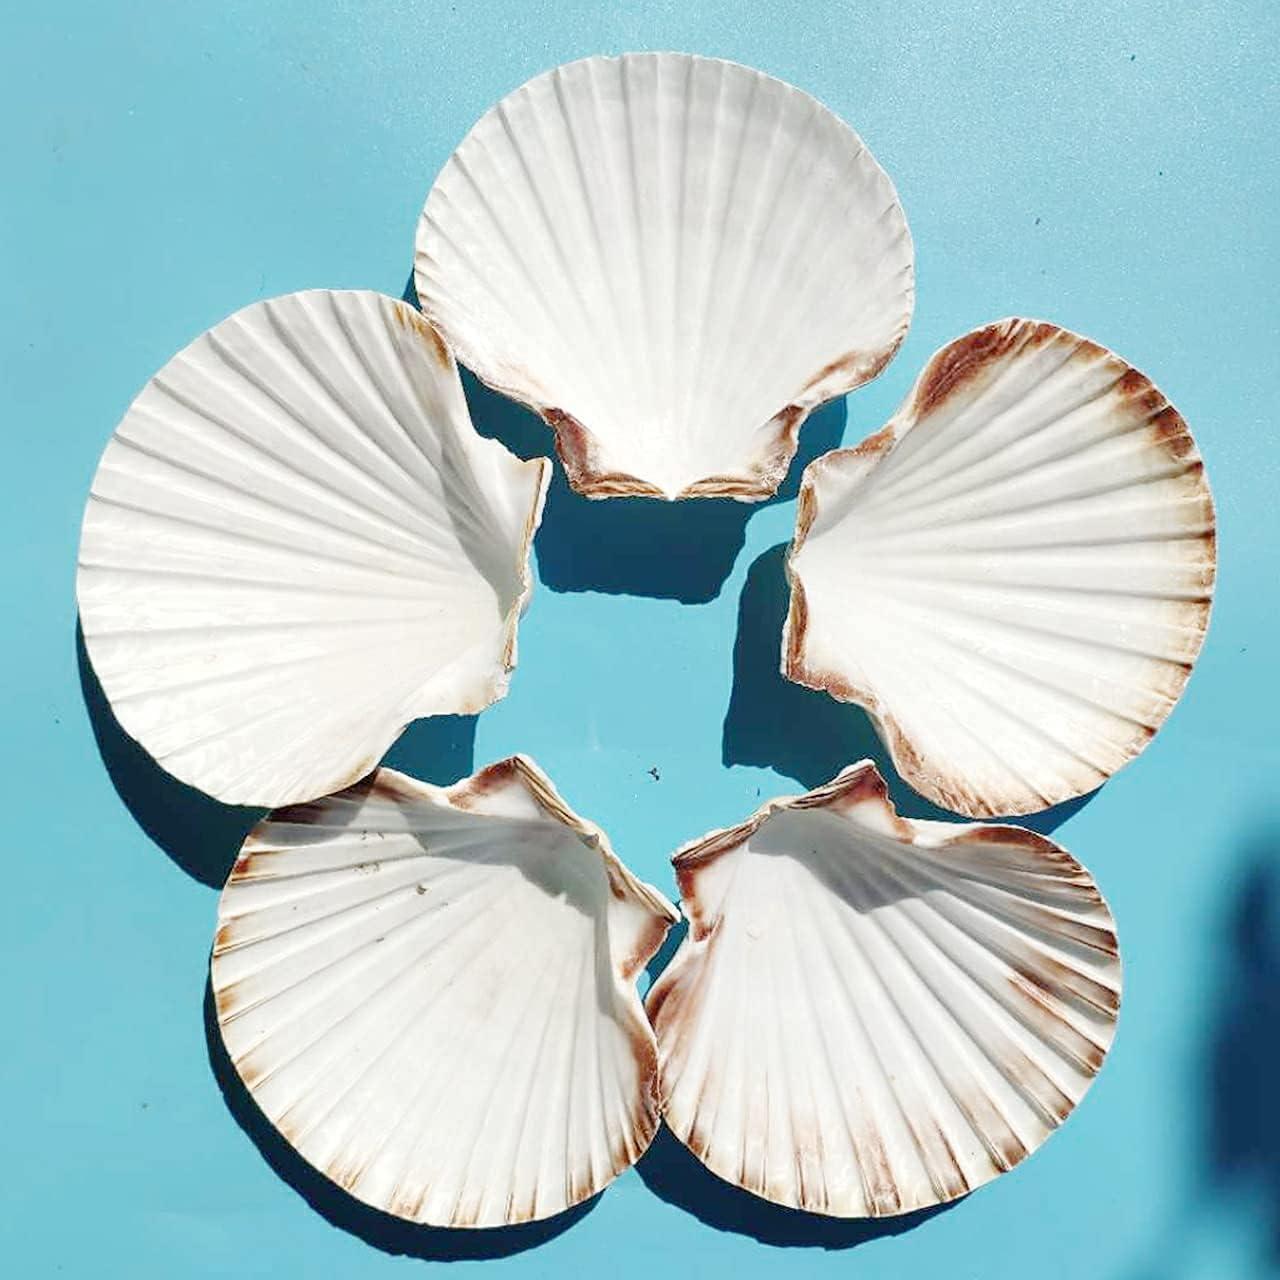  QICQDRAM Large Scallop Shells for Crafts 4''-5'' White Sea  Shells for Baking Shells, Crafts DIY Painting Beaching Wedding Decoration,  Beach Natural Scallop Shells Bulk : Home & Kitchen